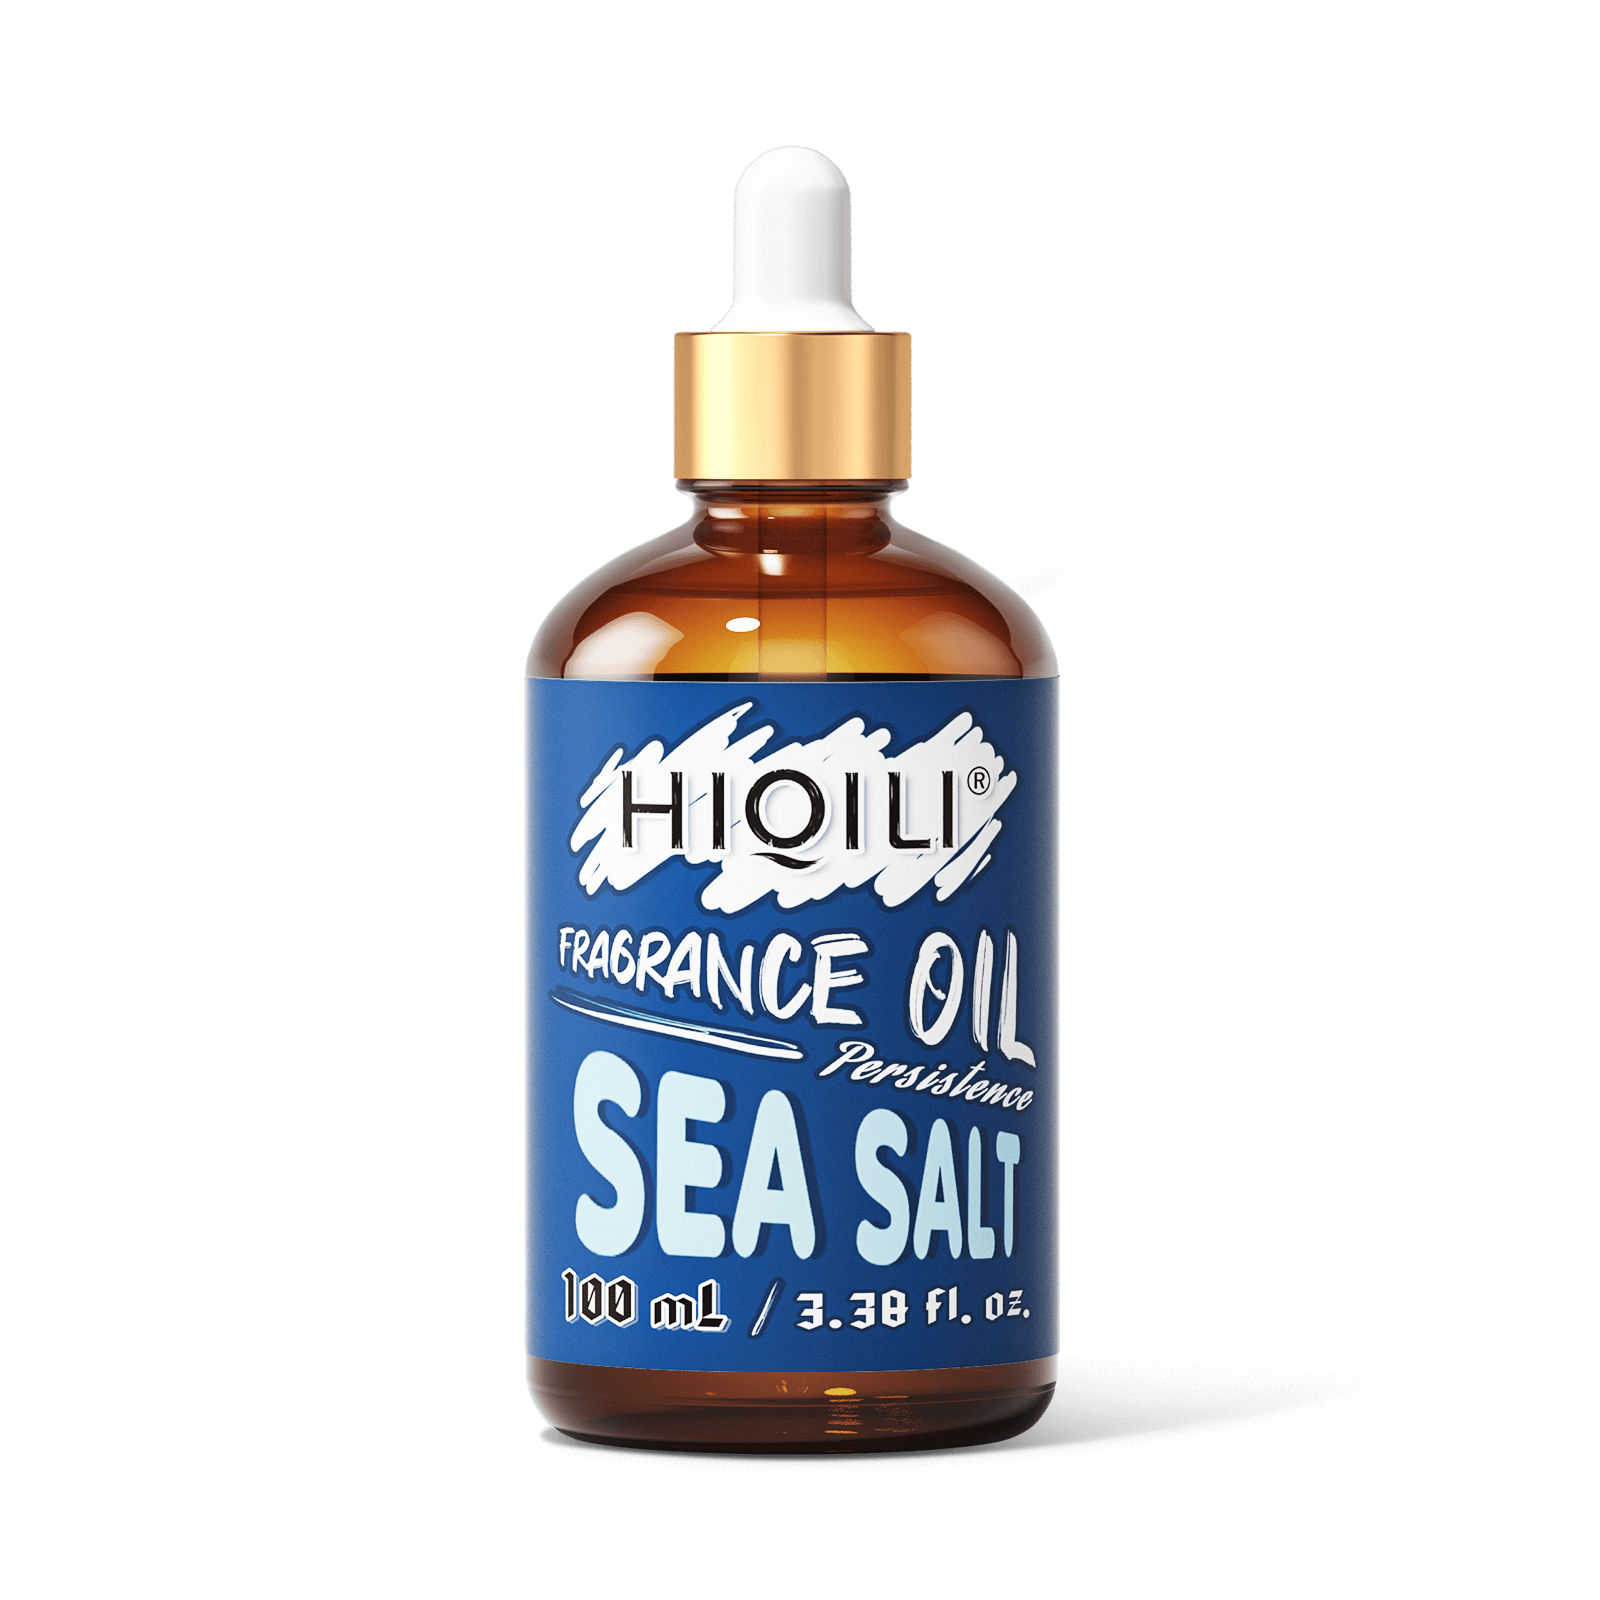 Sea Salt Fragrance Oil